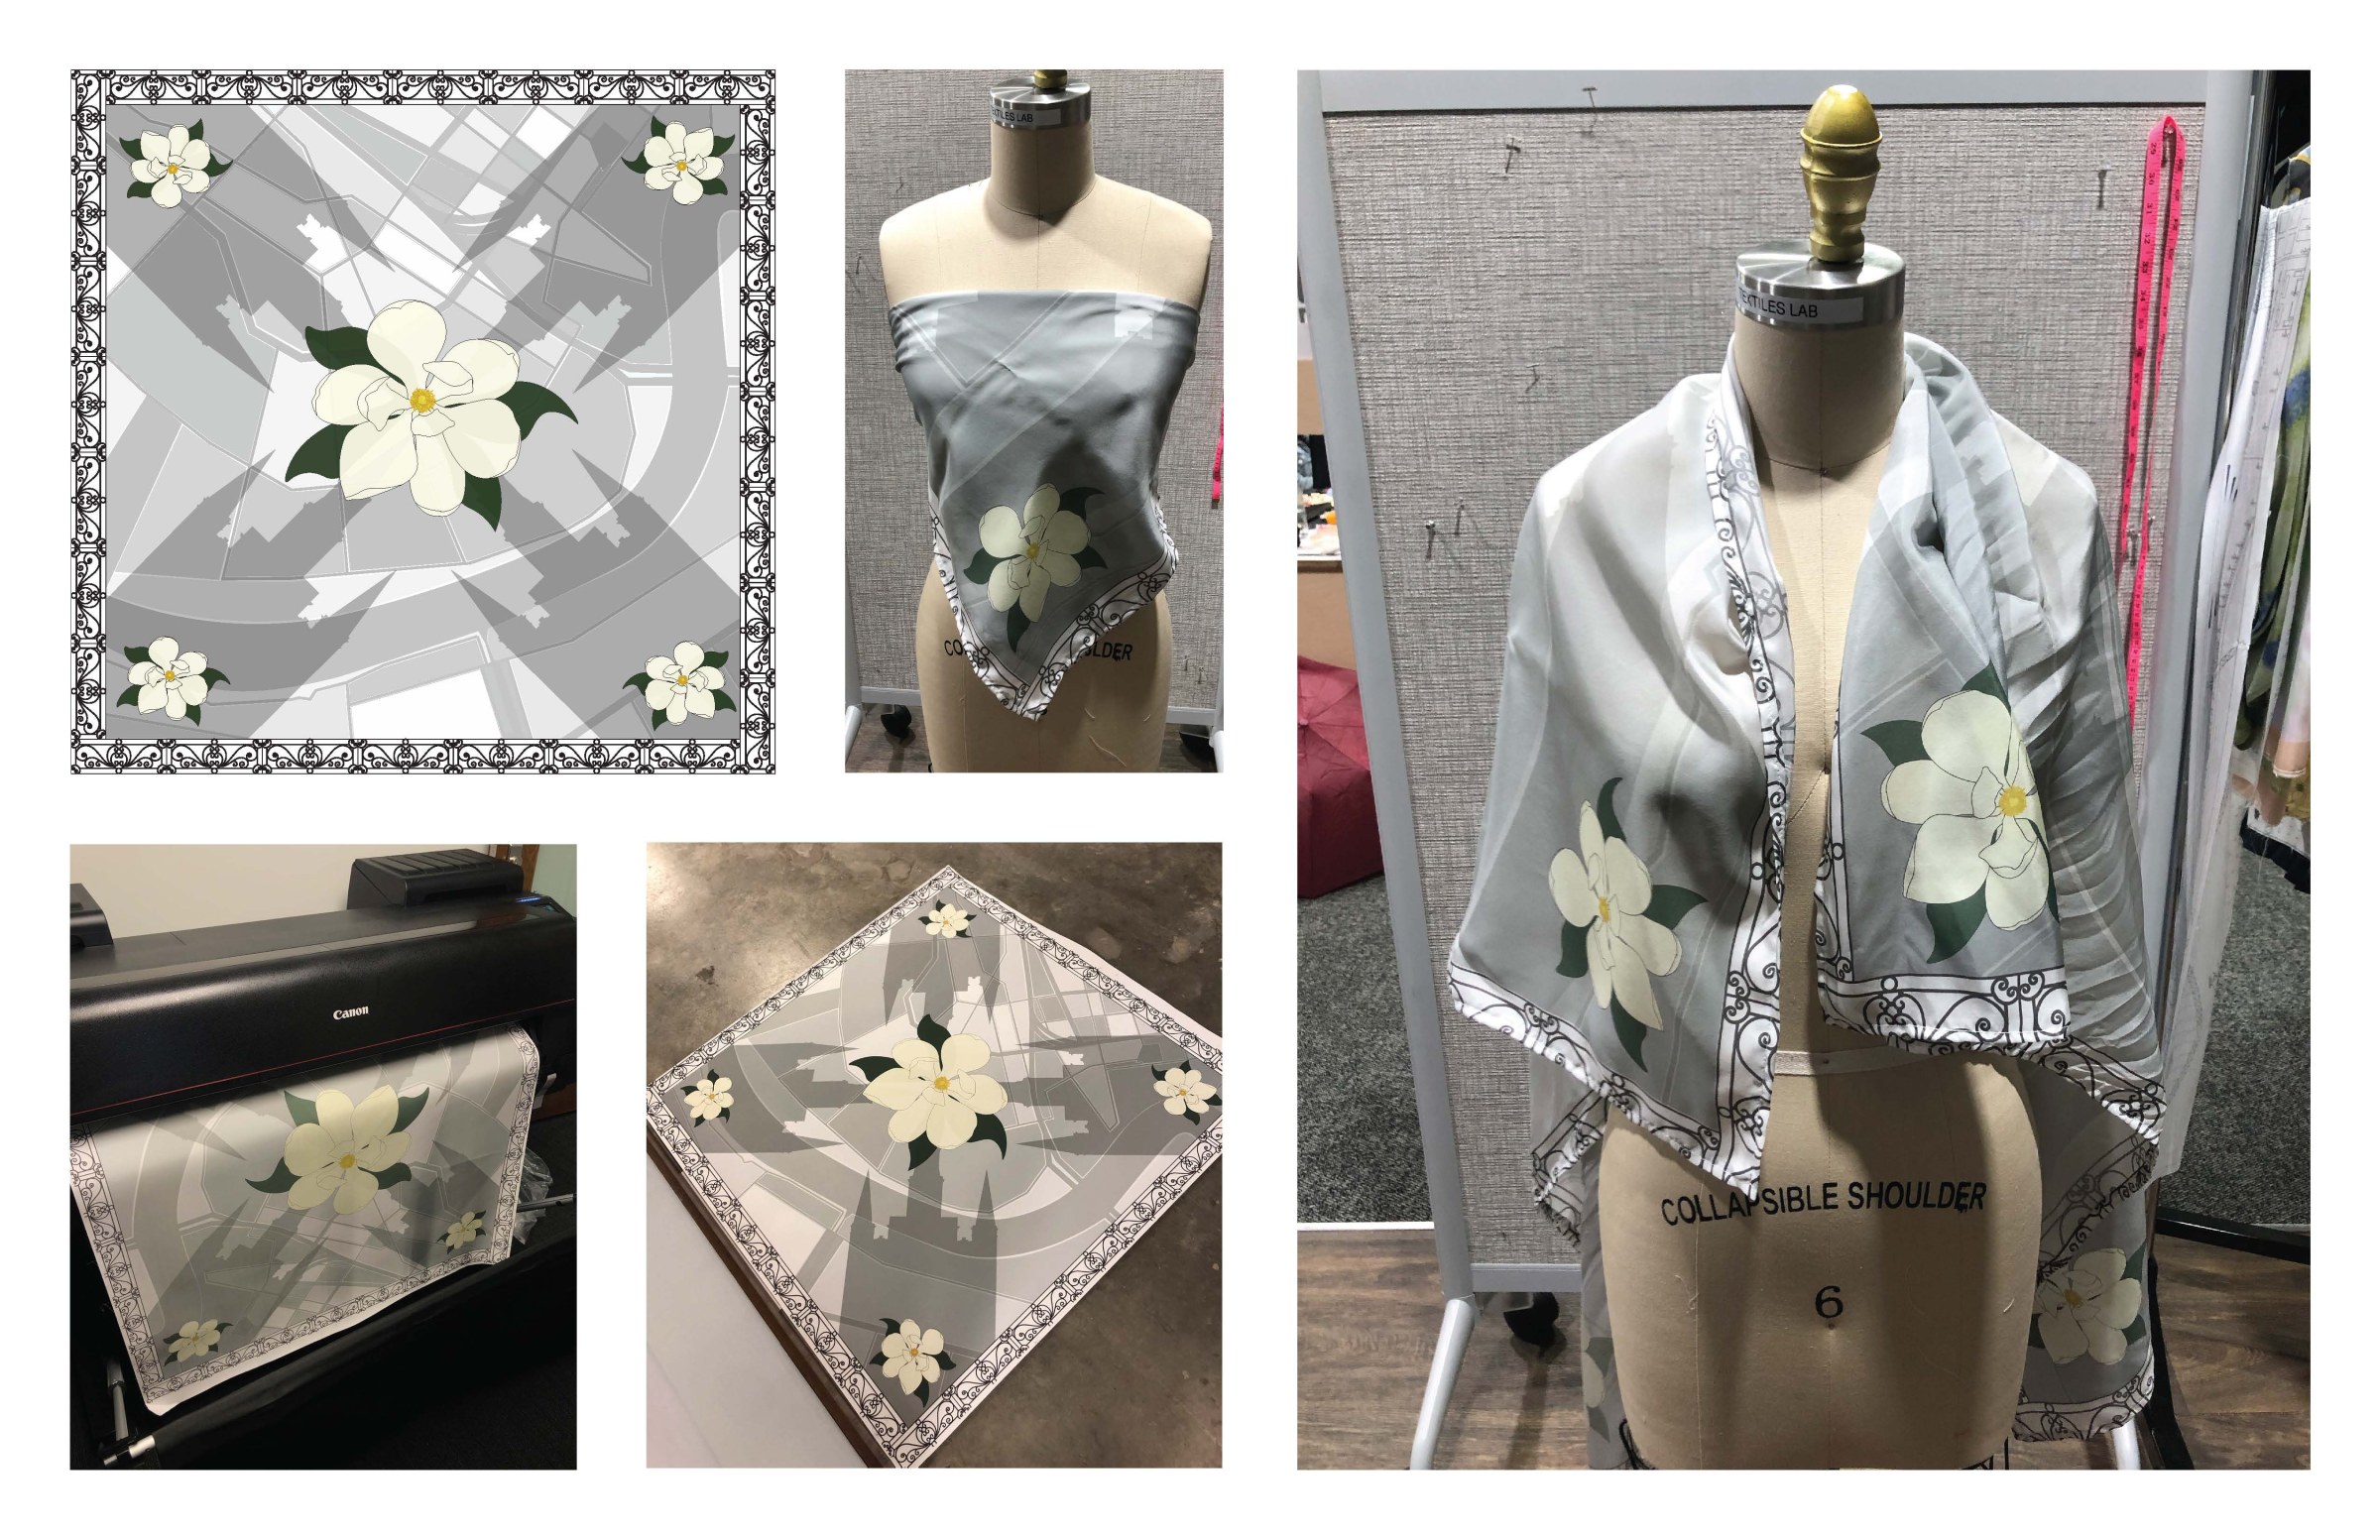 Textile Design Studio student's design process, creating the scarf